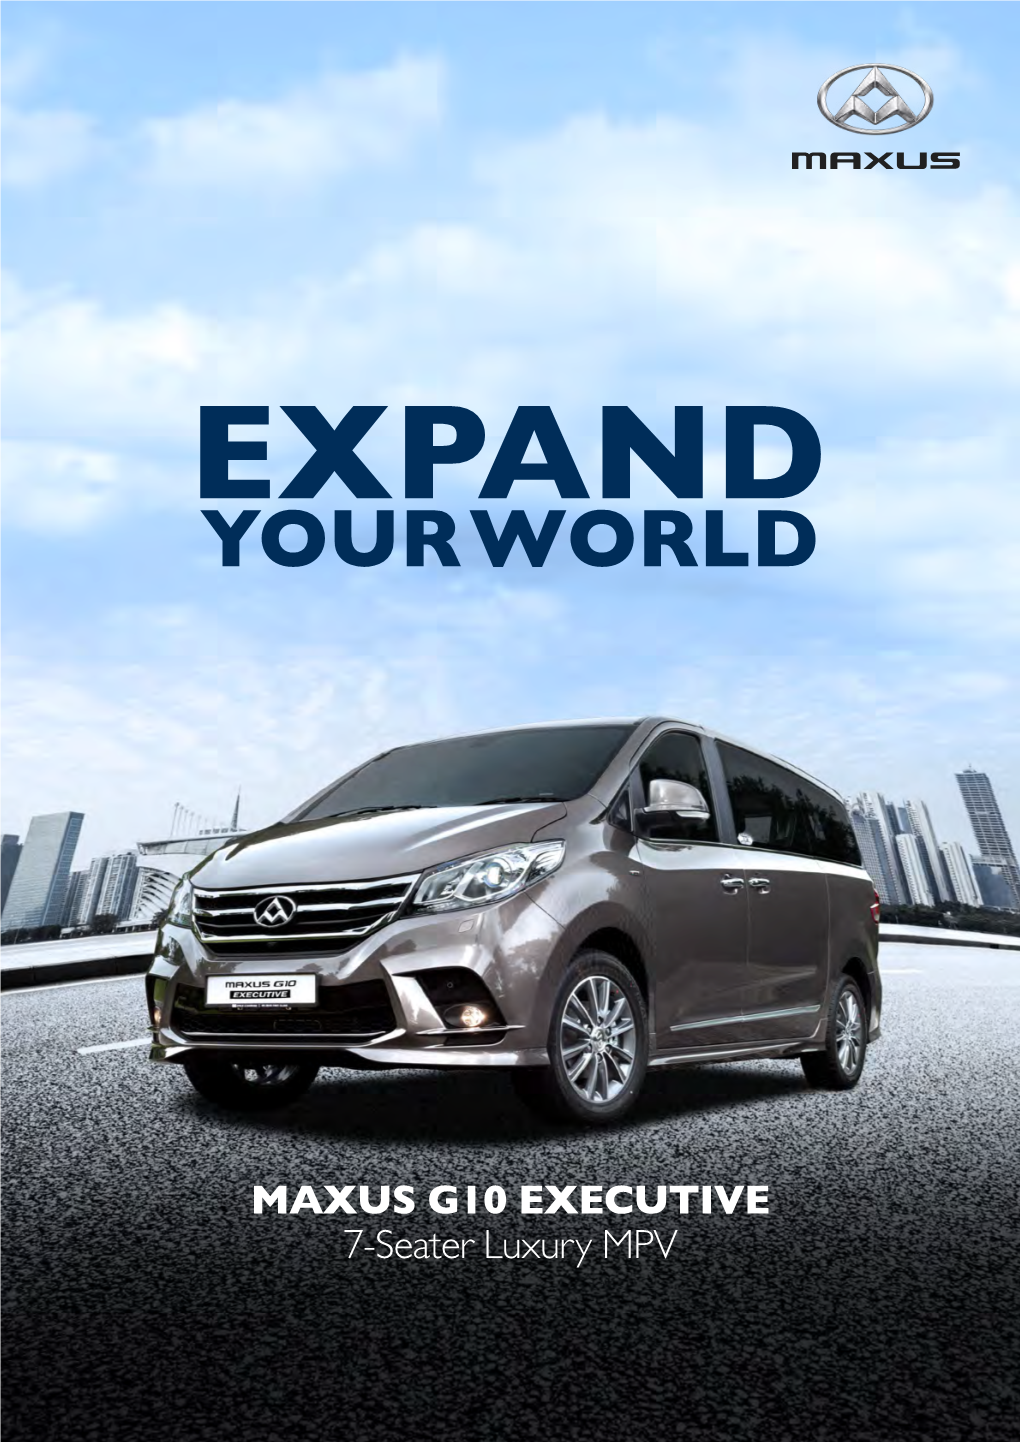 7-Seater Luxury MPV MAXUS G10 EXECUTIVE